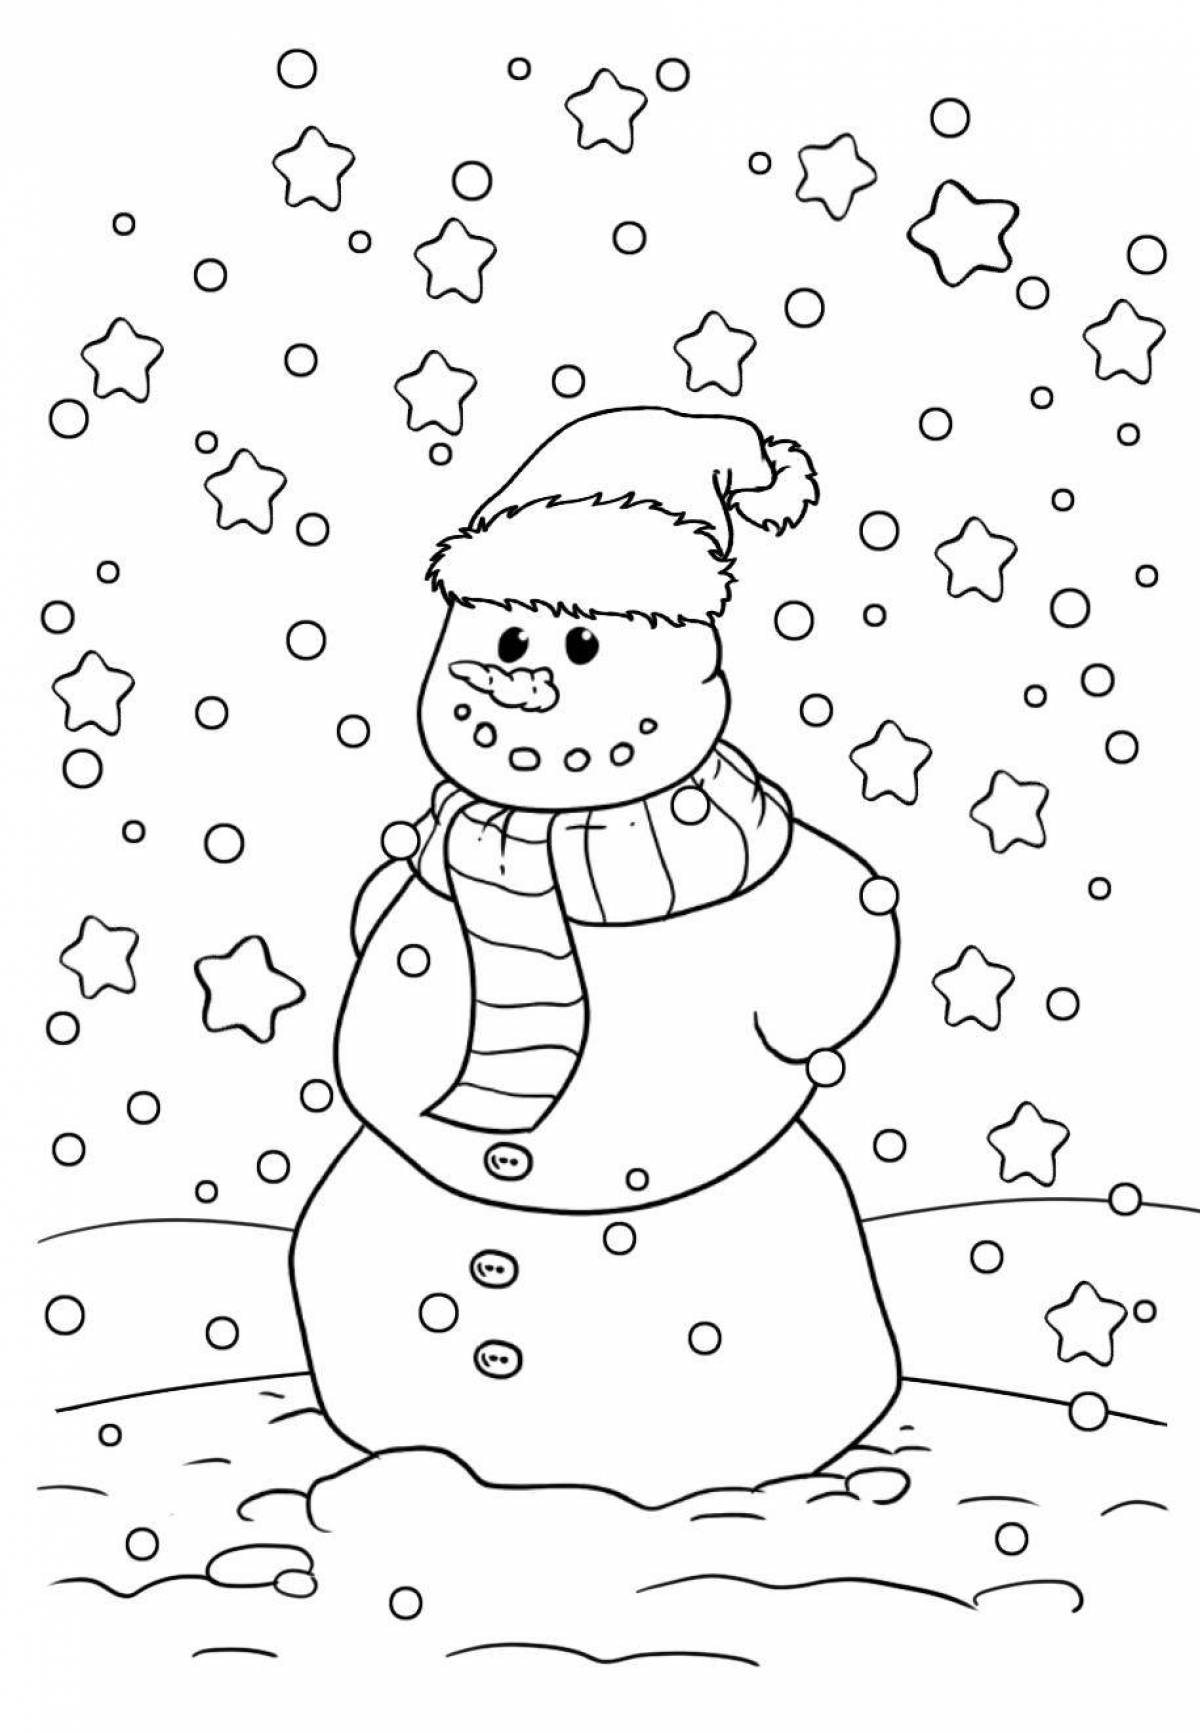 Playful Christmas snowman coloring book